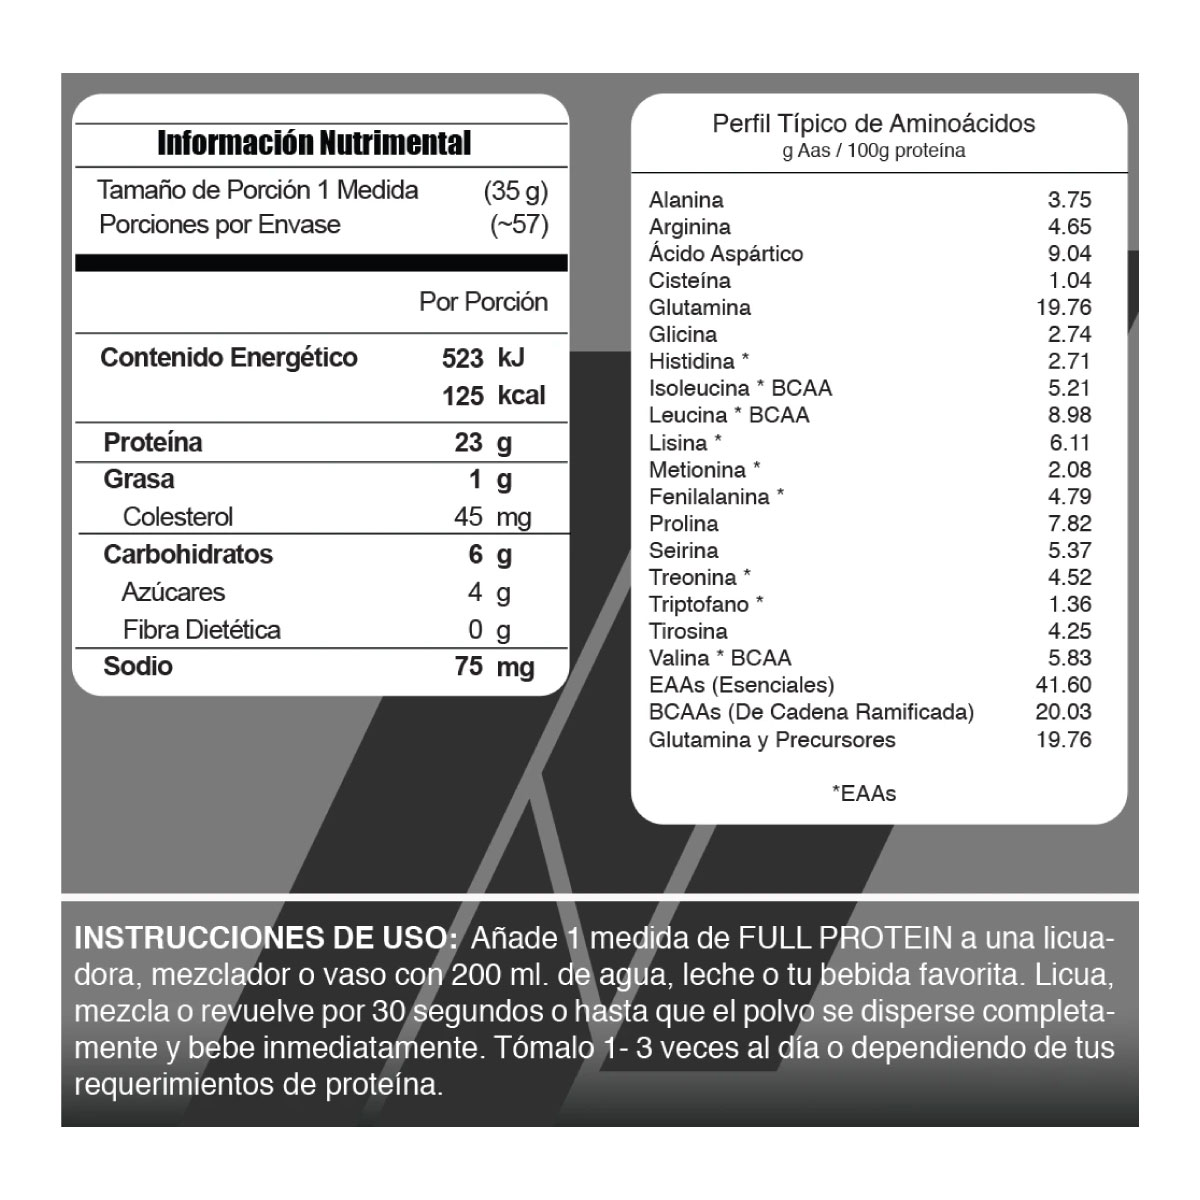 Meta Nutrition Full Protein 4.4 Lbs. 57 Serv. Chocolate